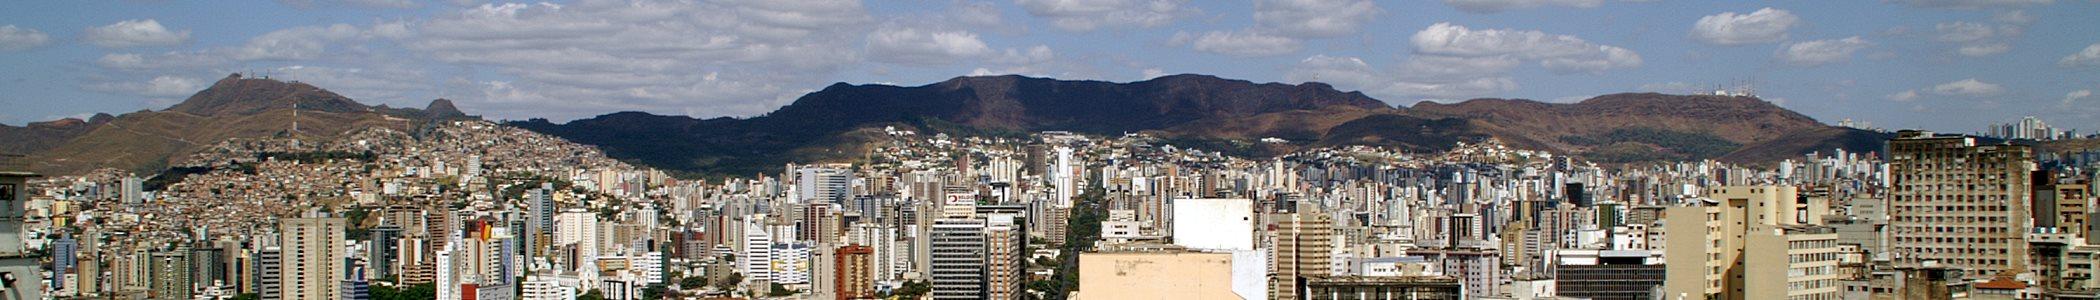 Banner image for Belo Horizonte on GigsGuide